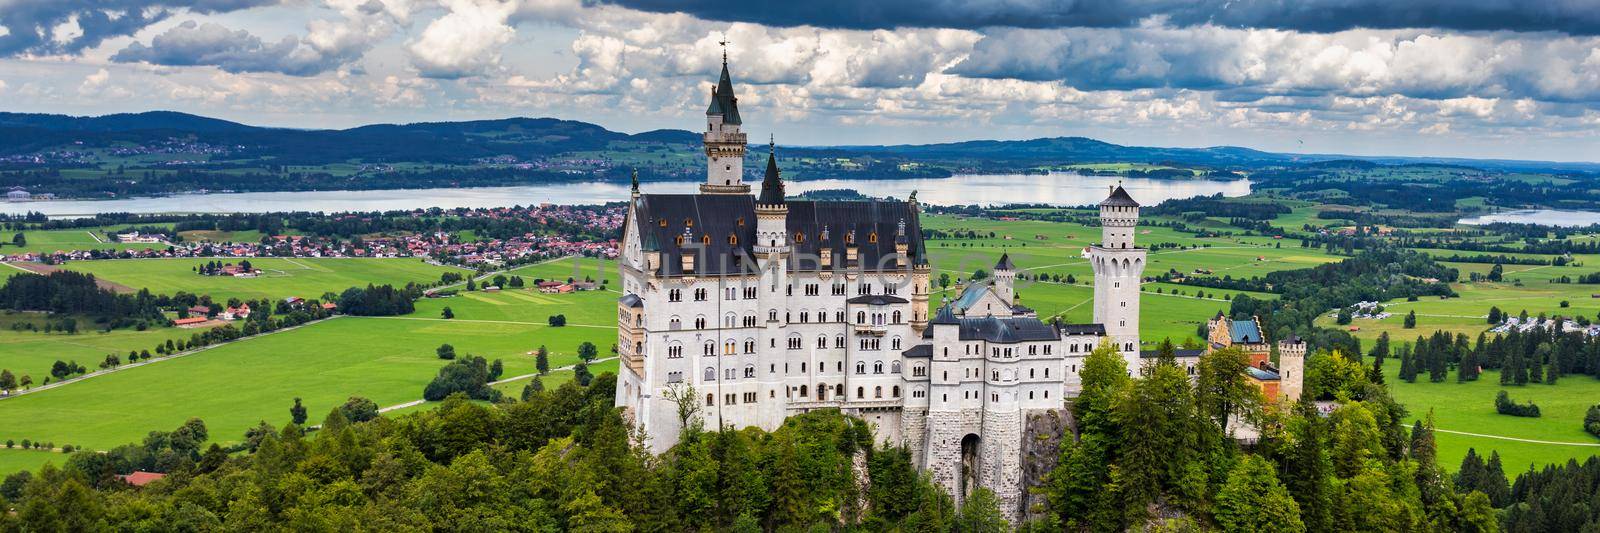 Neuschwanstein Fairytale Castle near Fussen, Bavaria, Germany. View of famous Neuschwanstein Castle. Location: village of Hohenschwangau, near Fussen, southwest Bavaria, Germany, Europe